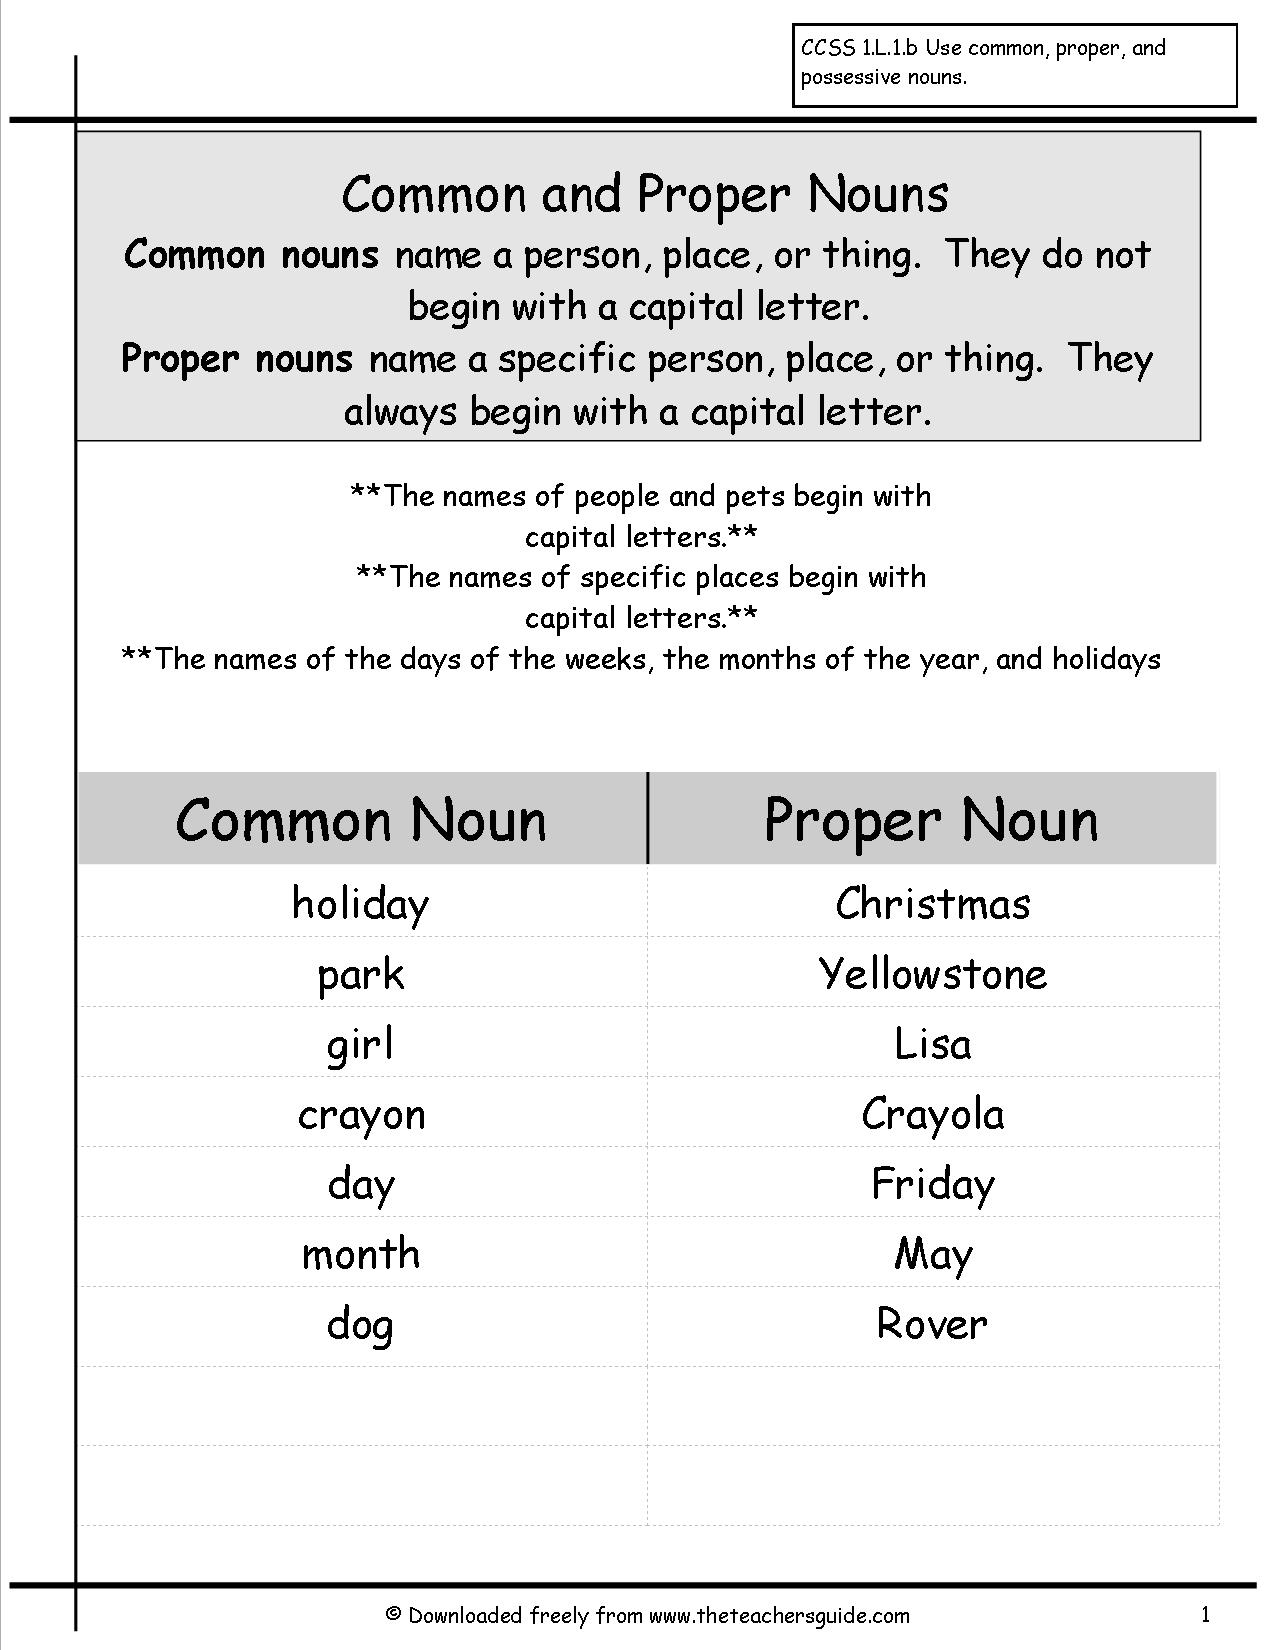 common-nouns-proper-nouns-worksheets